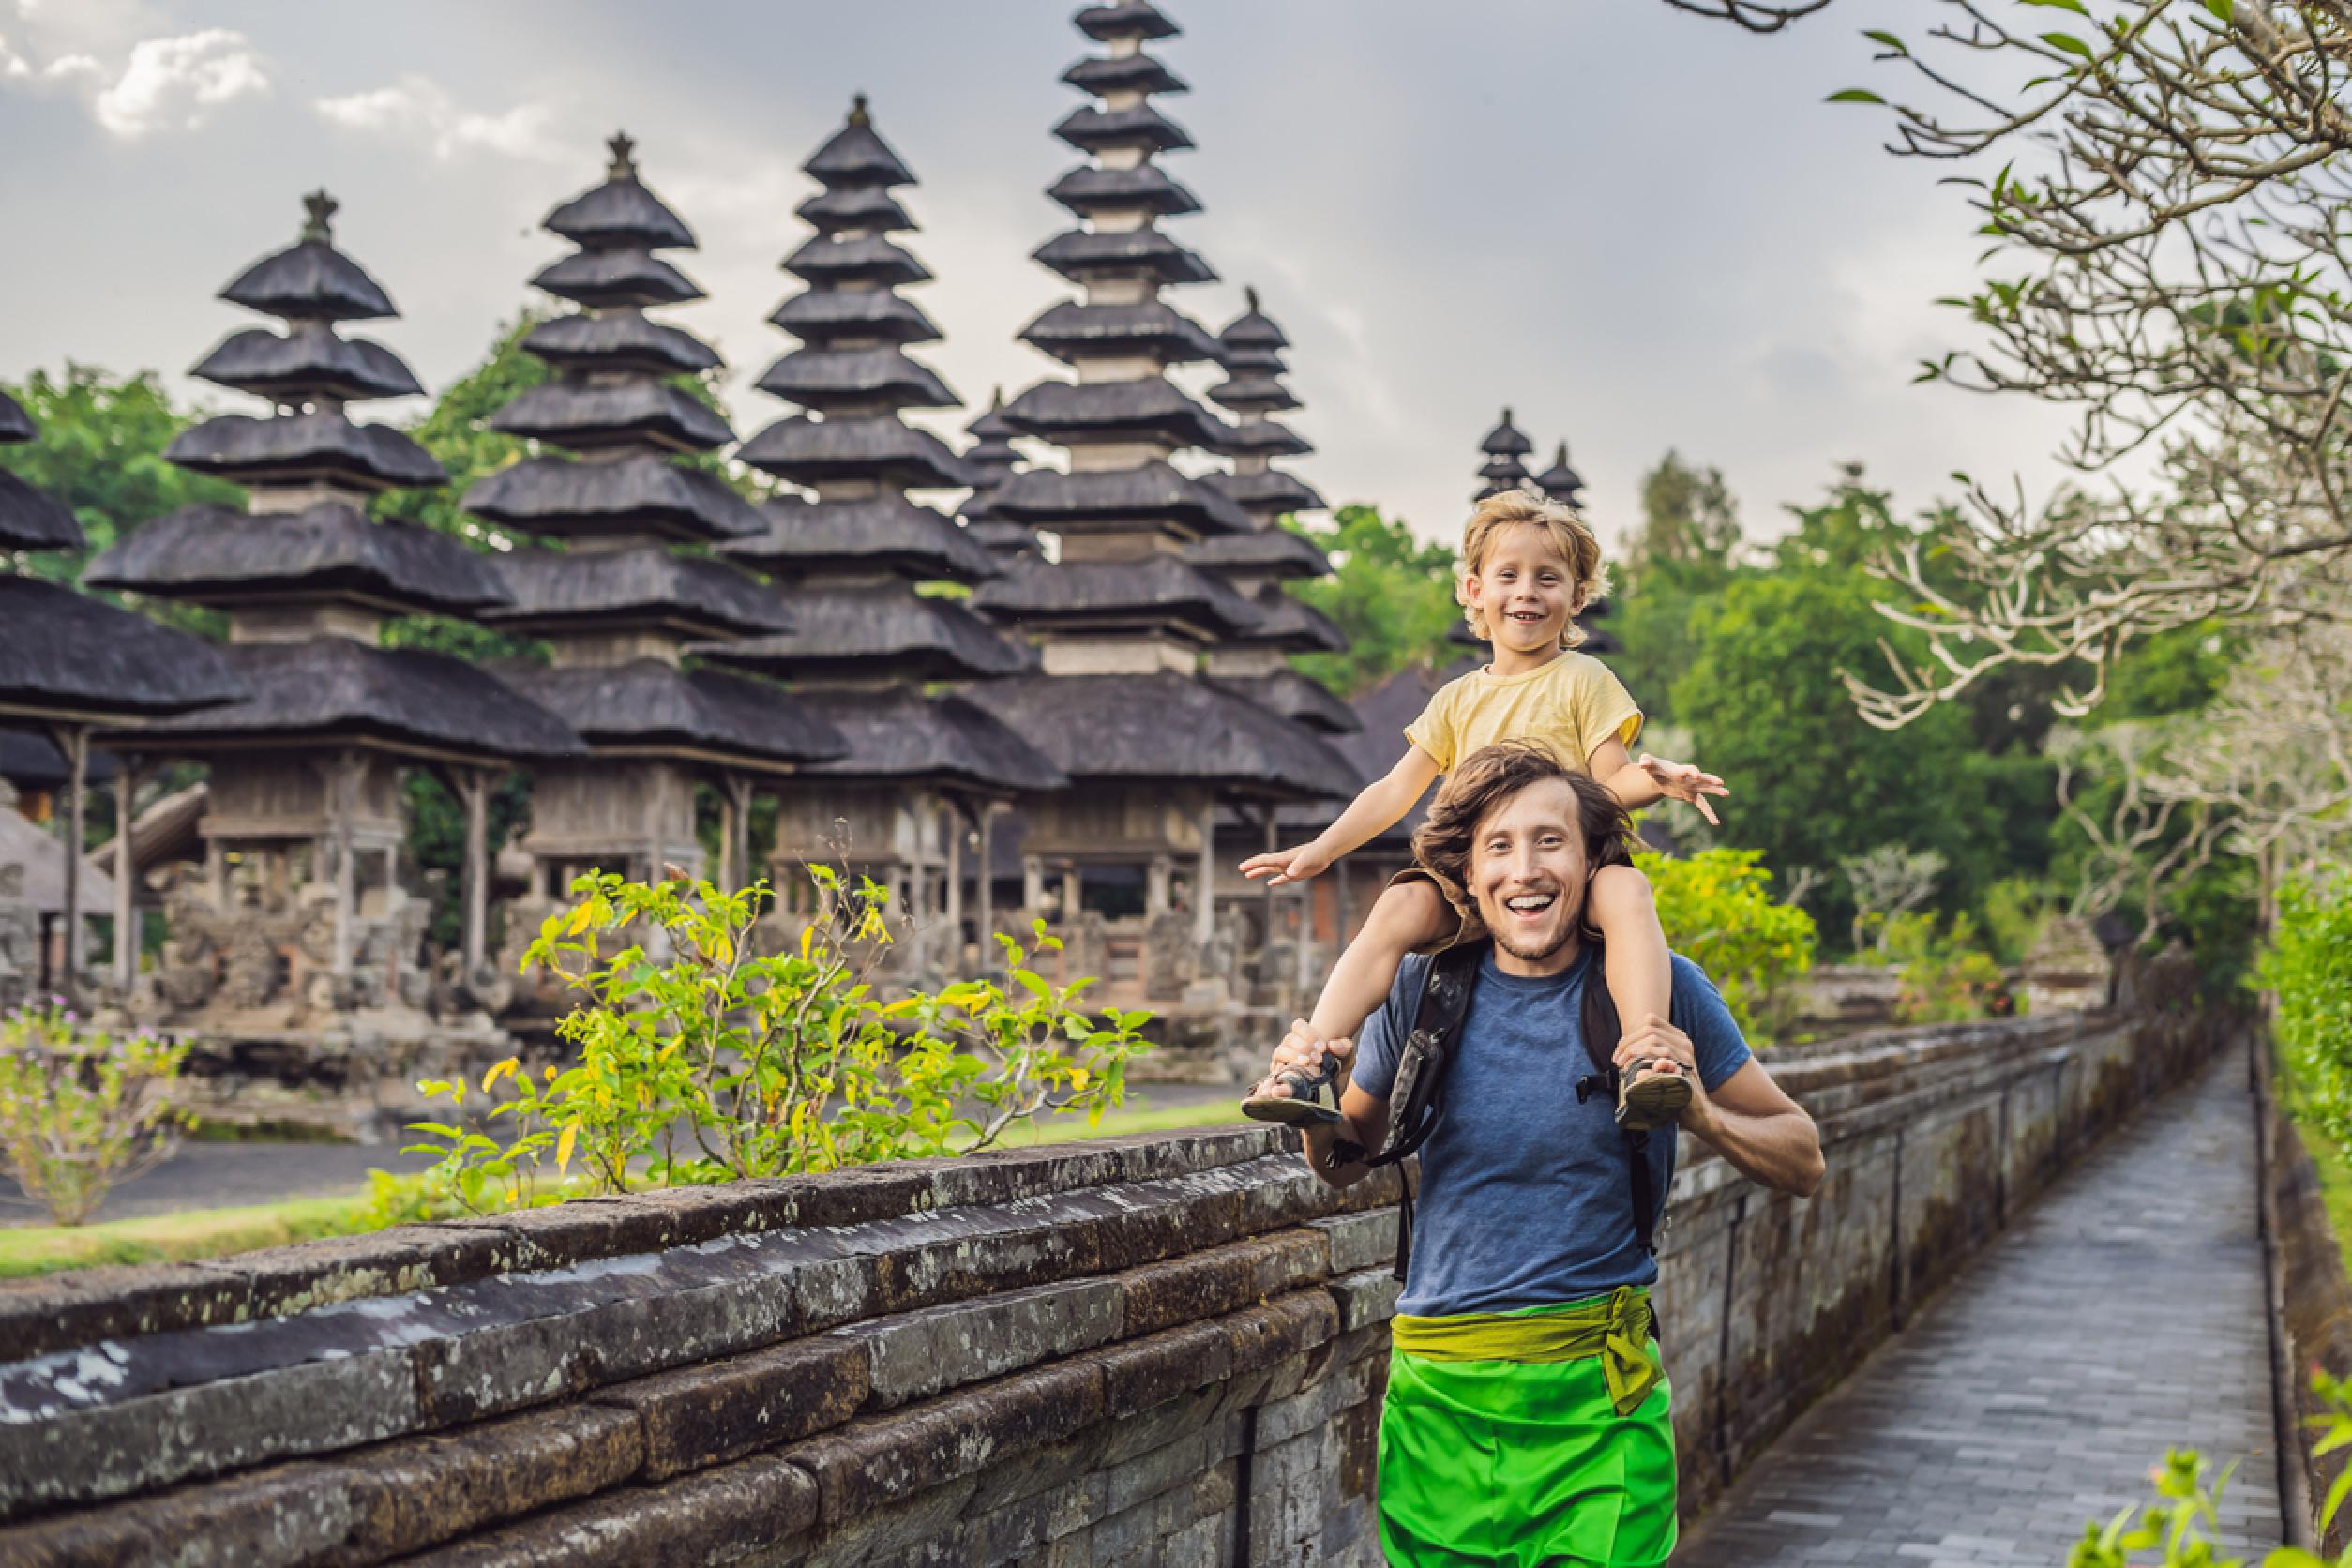 Bali - Indonesia Travel